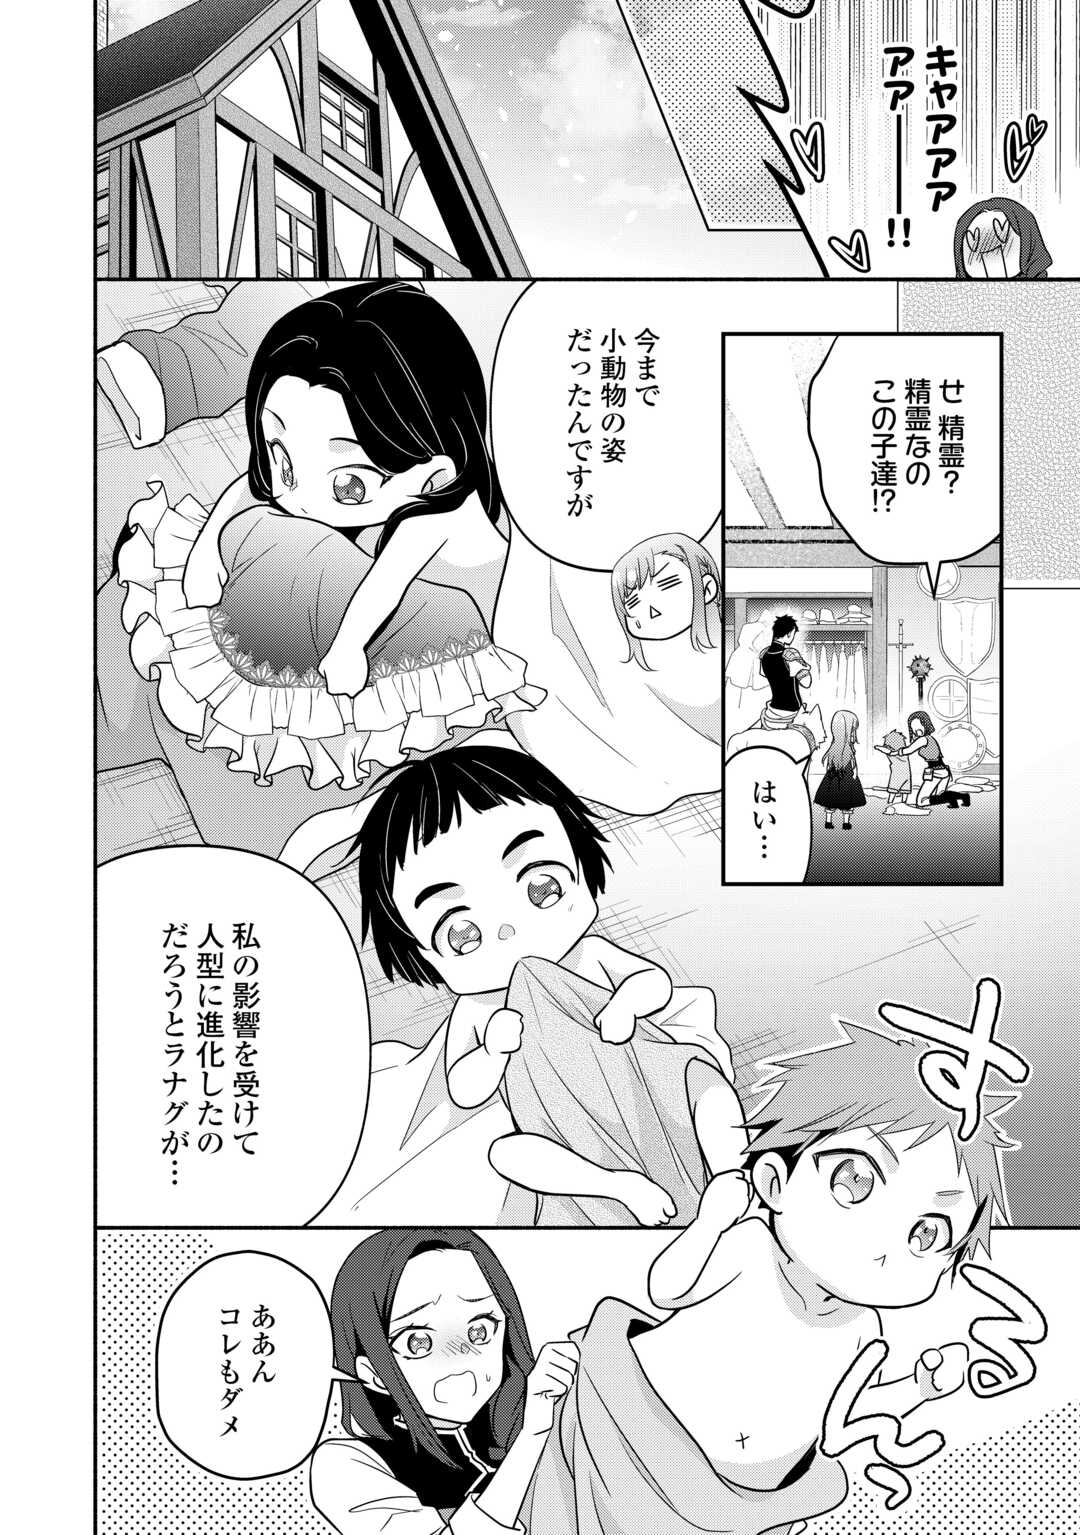 Tensei Youjo. Kamikemono to Ouji to, Saikyou no Ojisan Youhei-dan no Naka de Ikiru. - Chapter 24 - Page 14